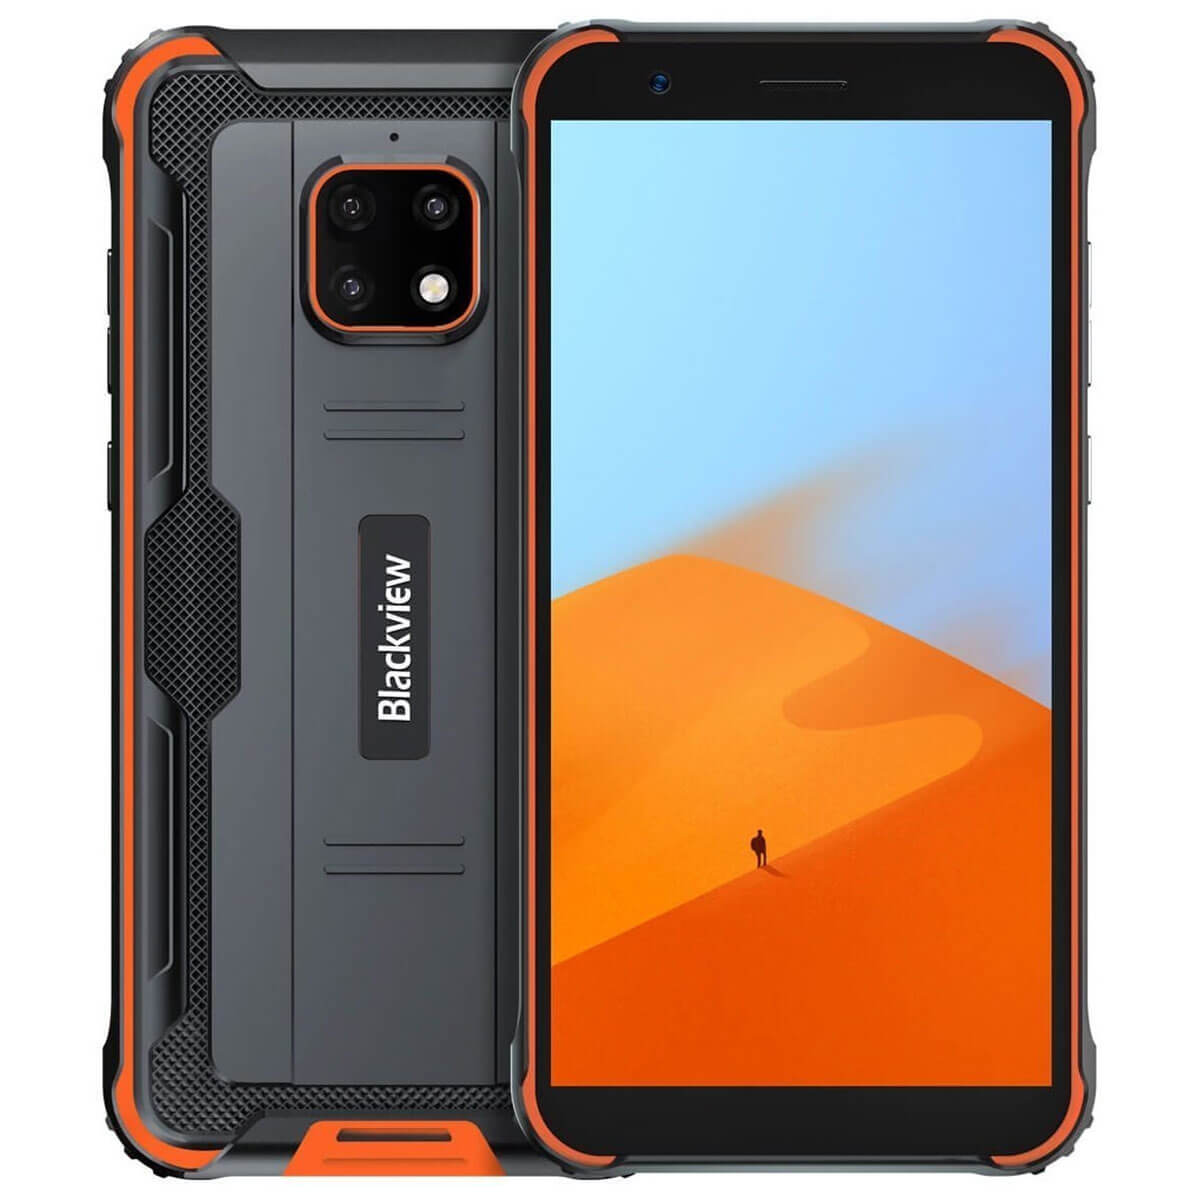 Смартфон Blackview BV4900 3/32GB Dual SIM Orange (6931548306467)